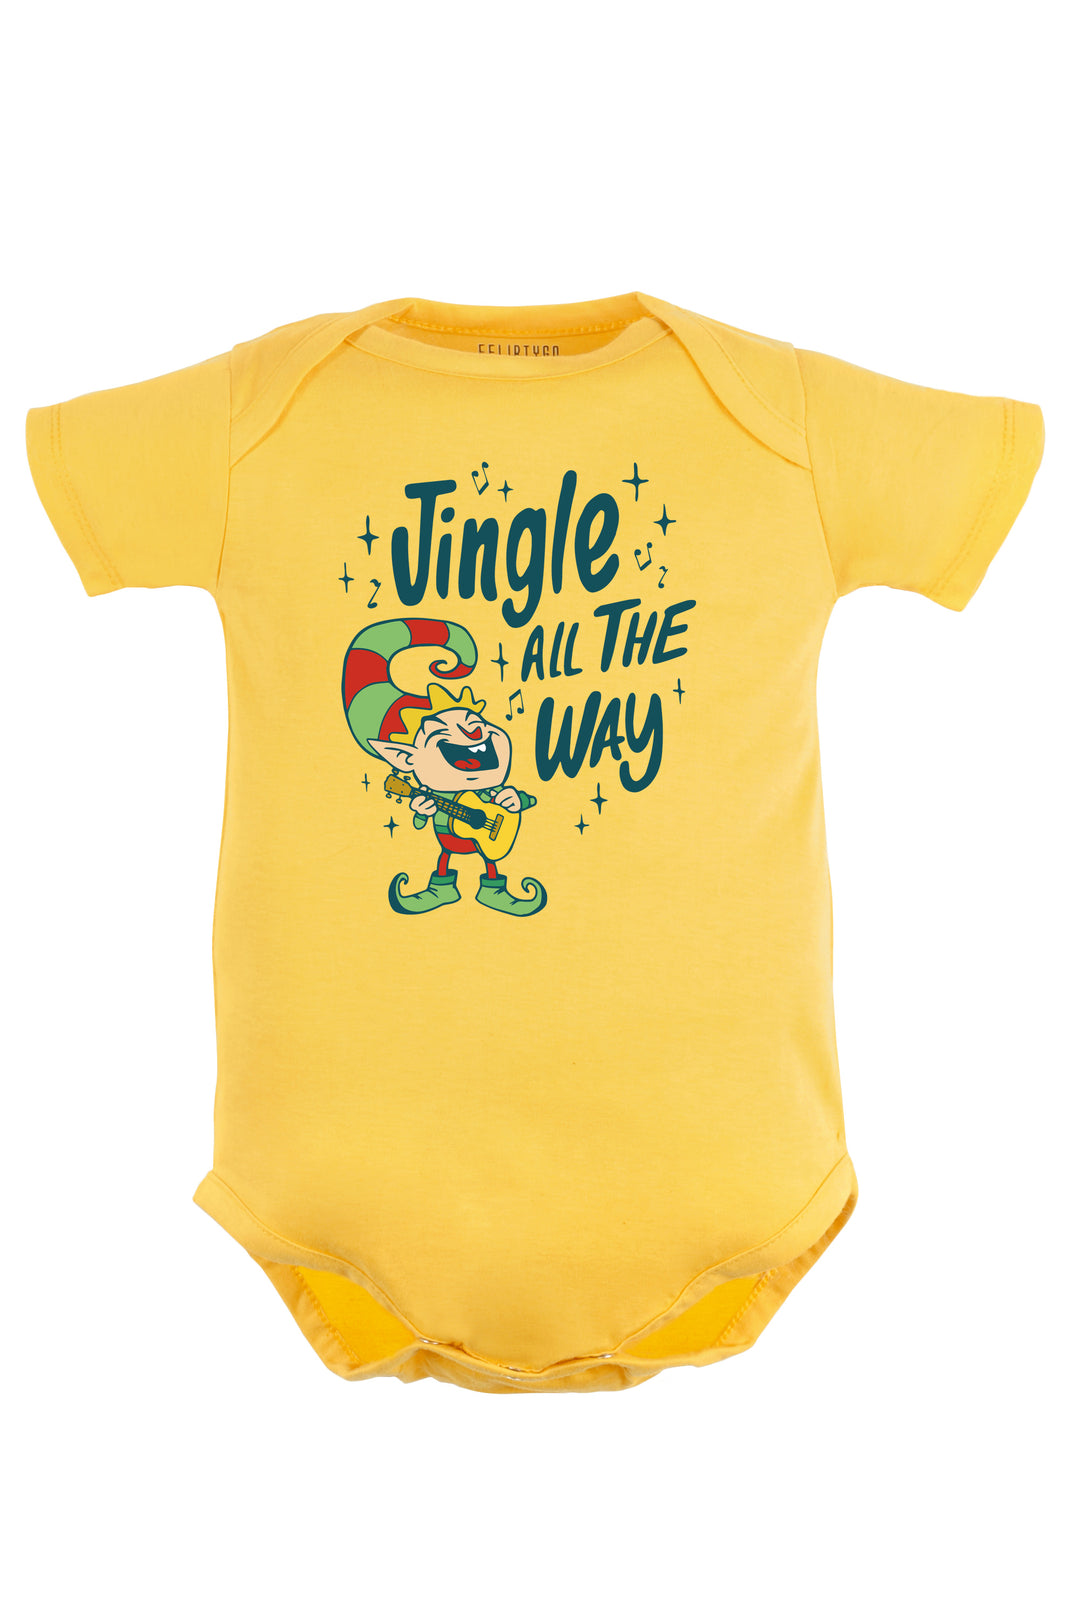 Jingle all the way Baby Romper | Onesies